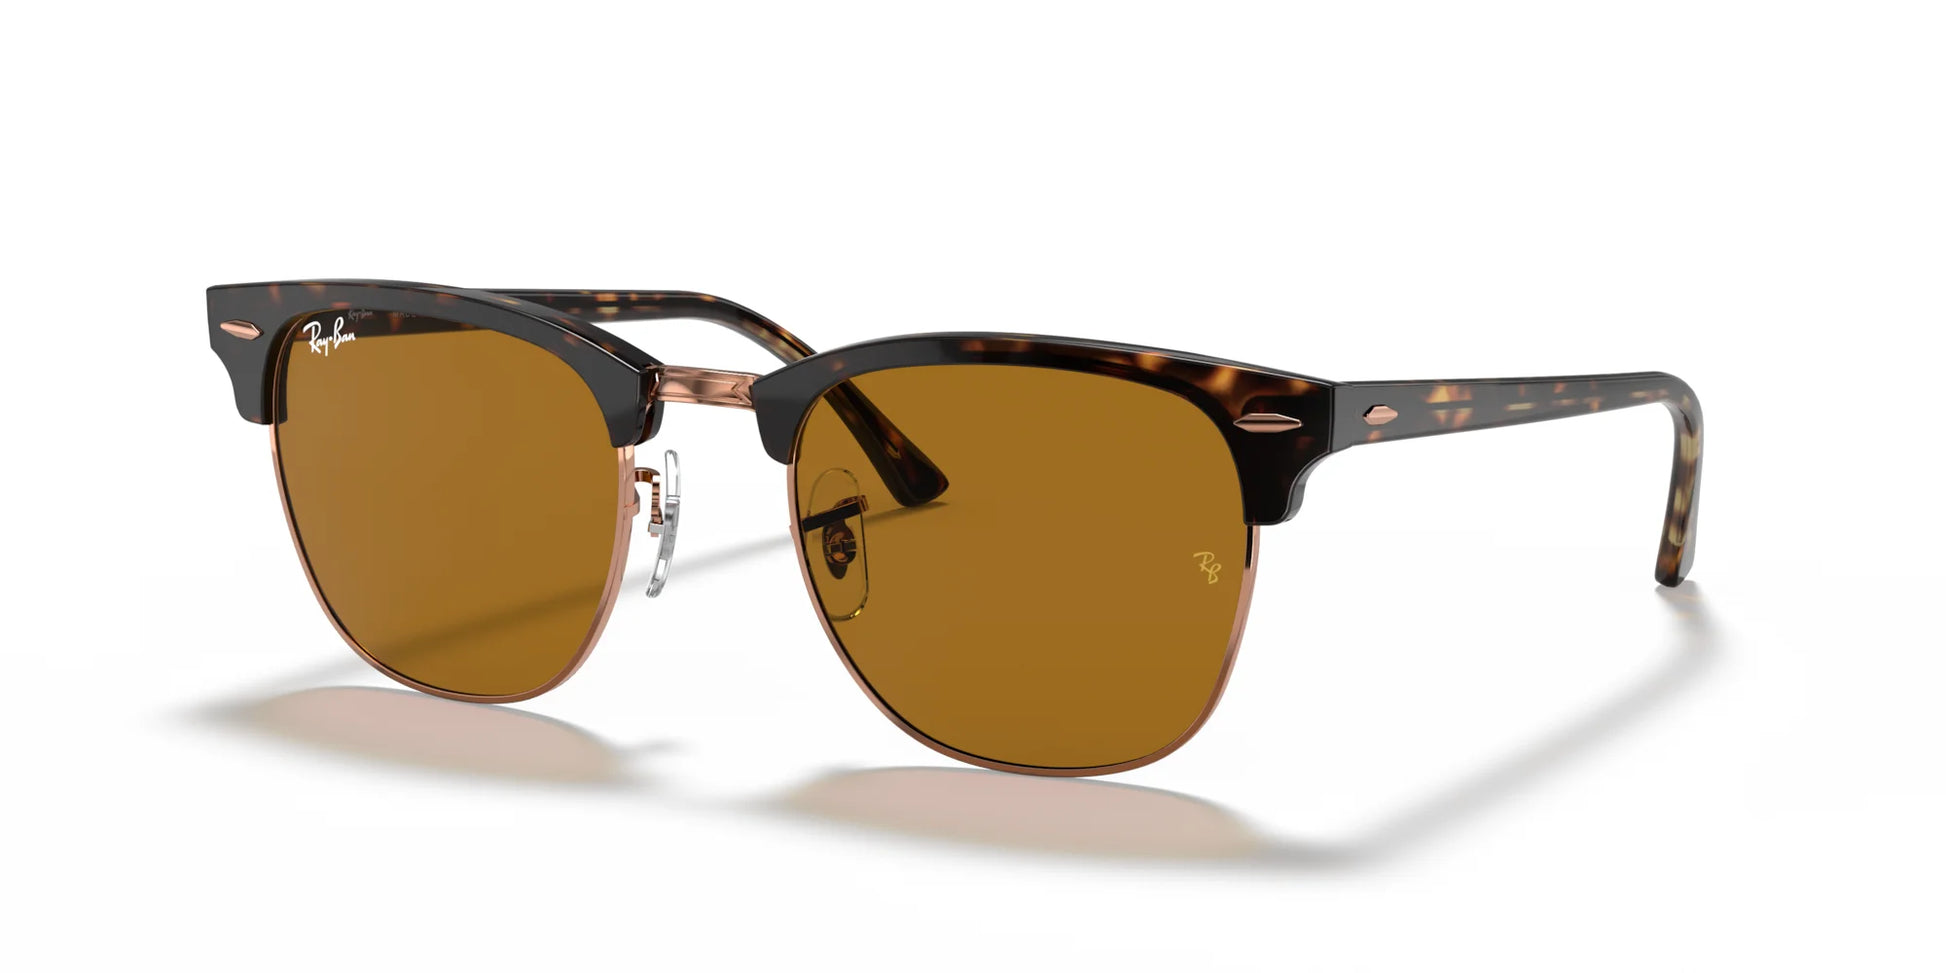 Ray-Ban CLUBMASTER RB3016 Sunglasses Havana / Brown